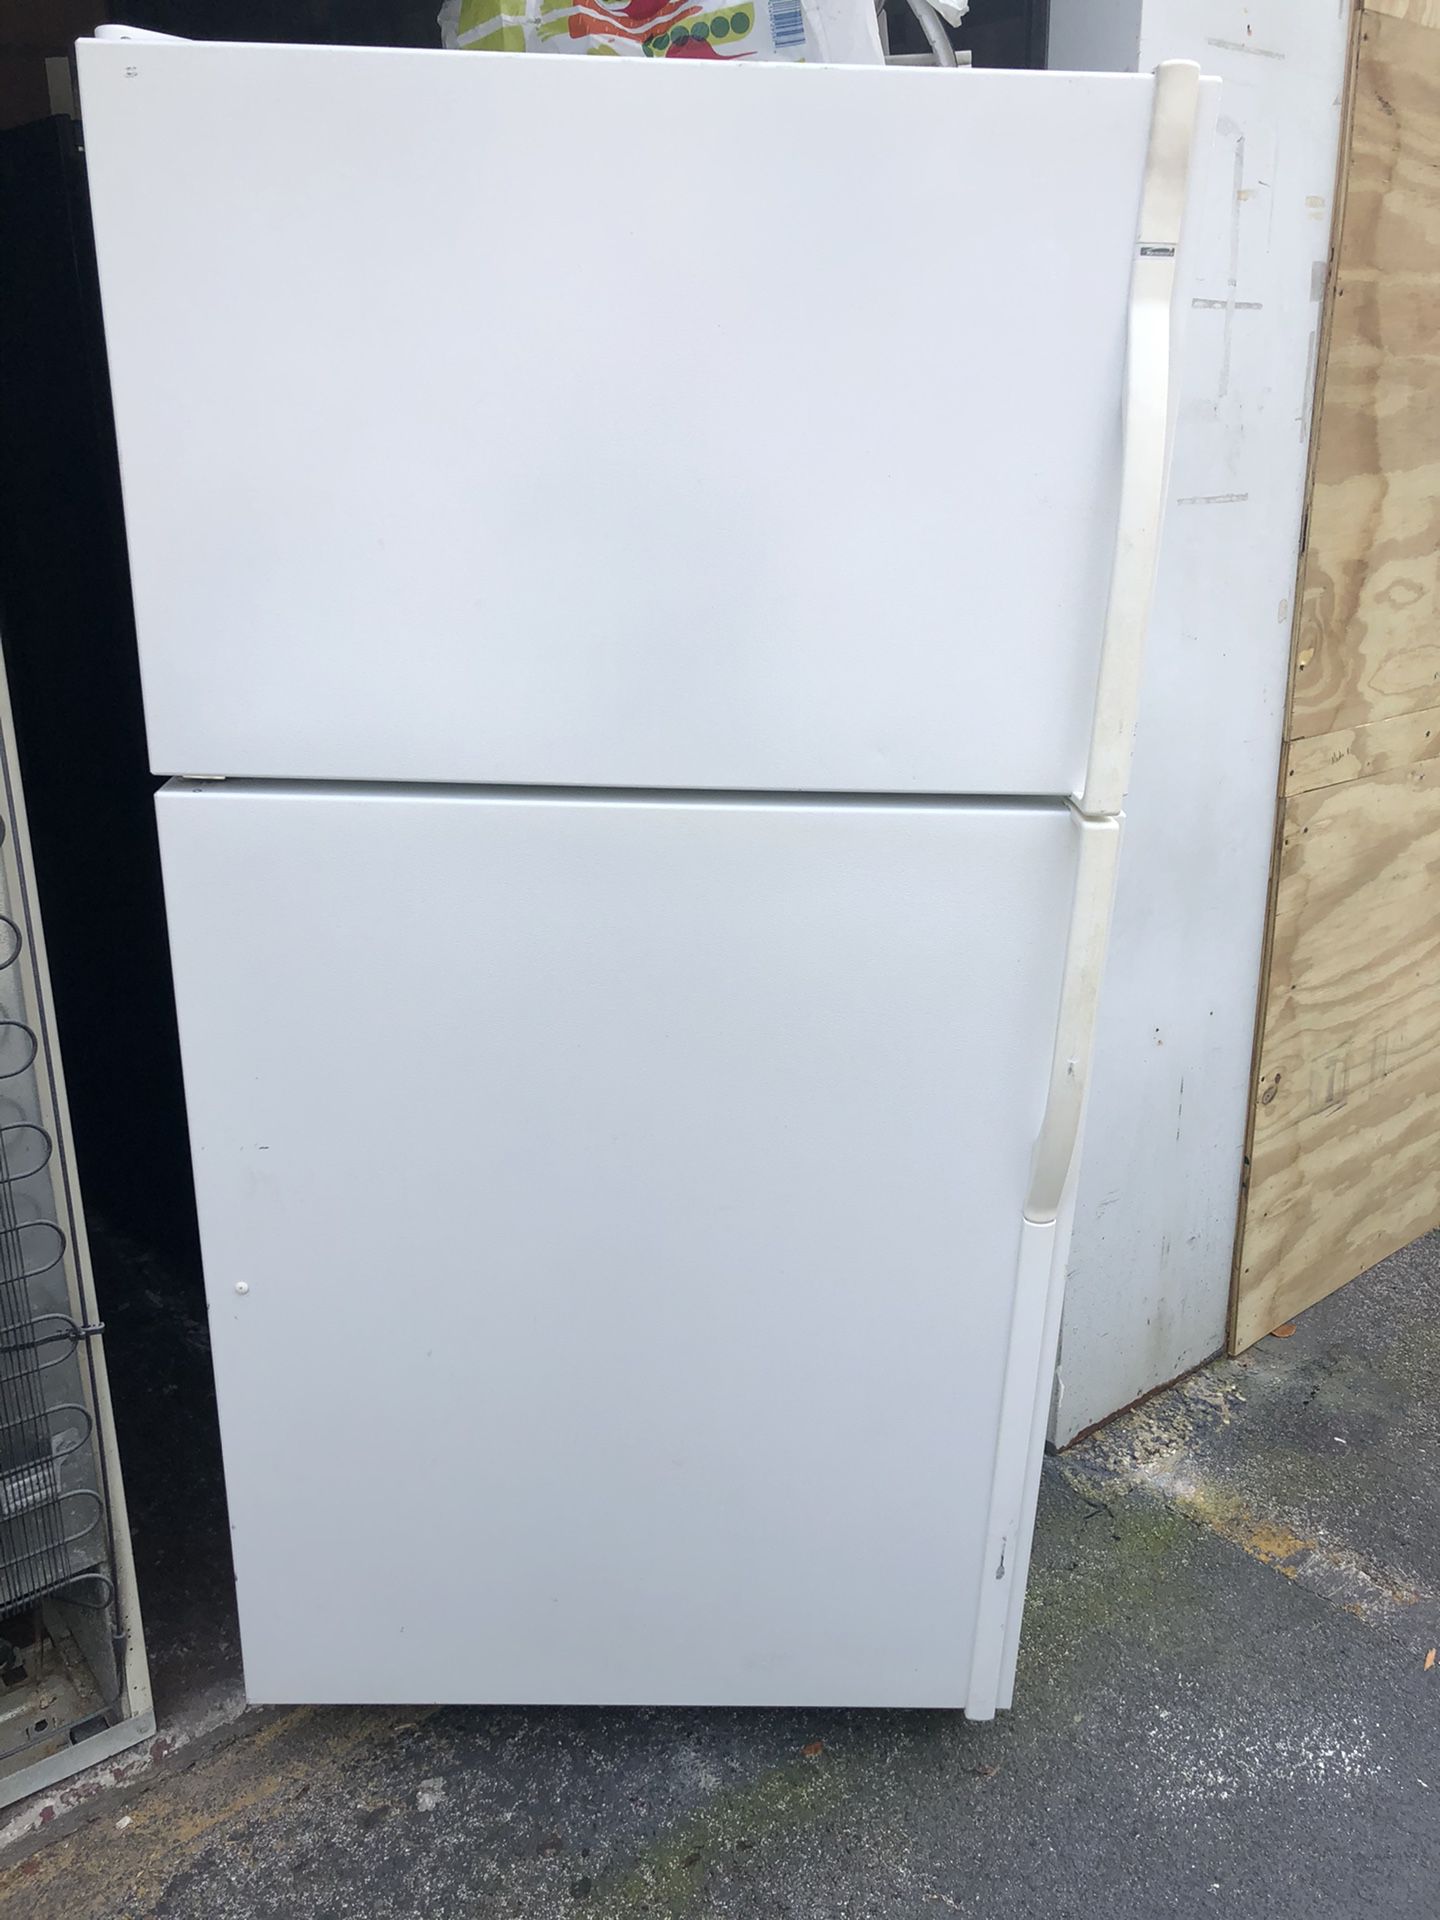 Refrigerator tops and bottom